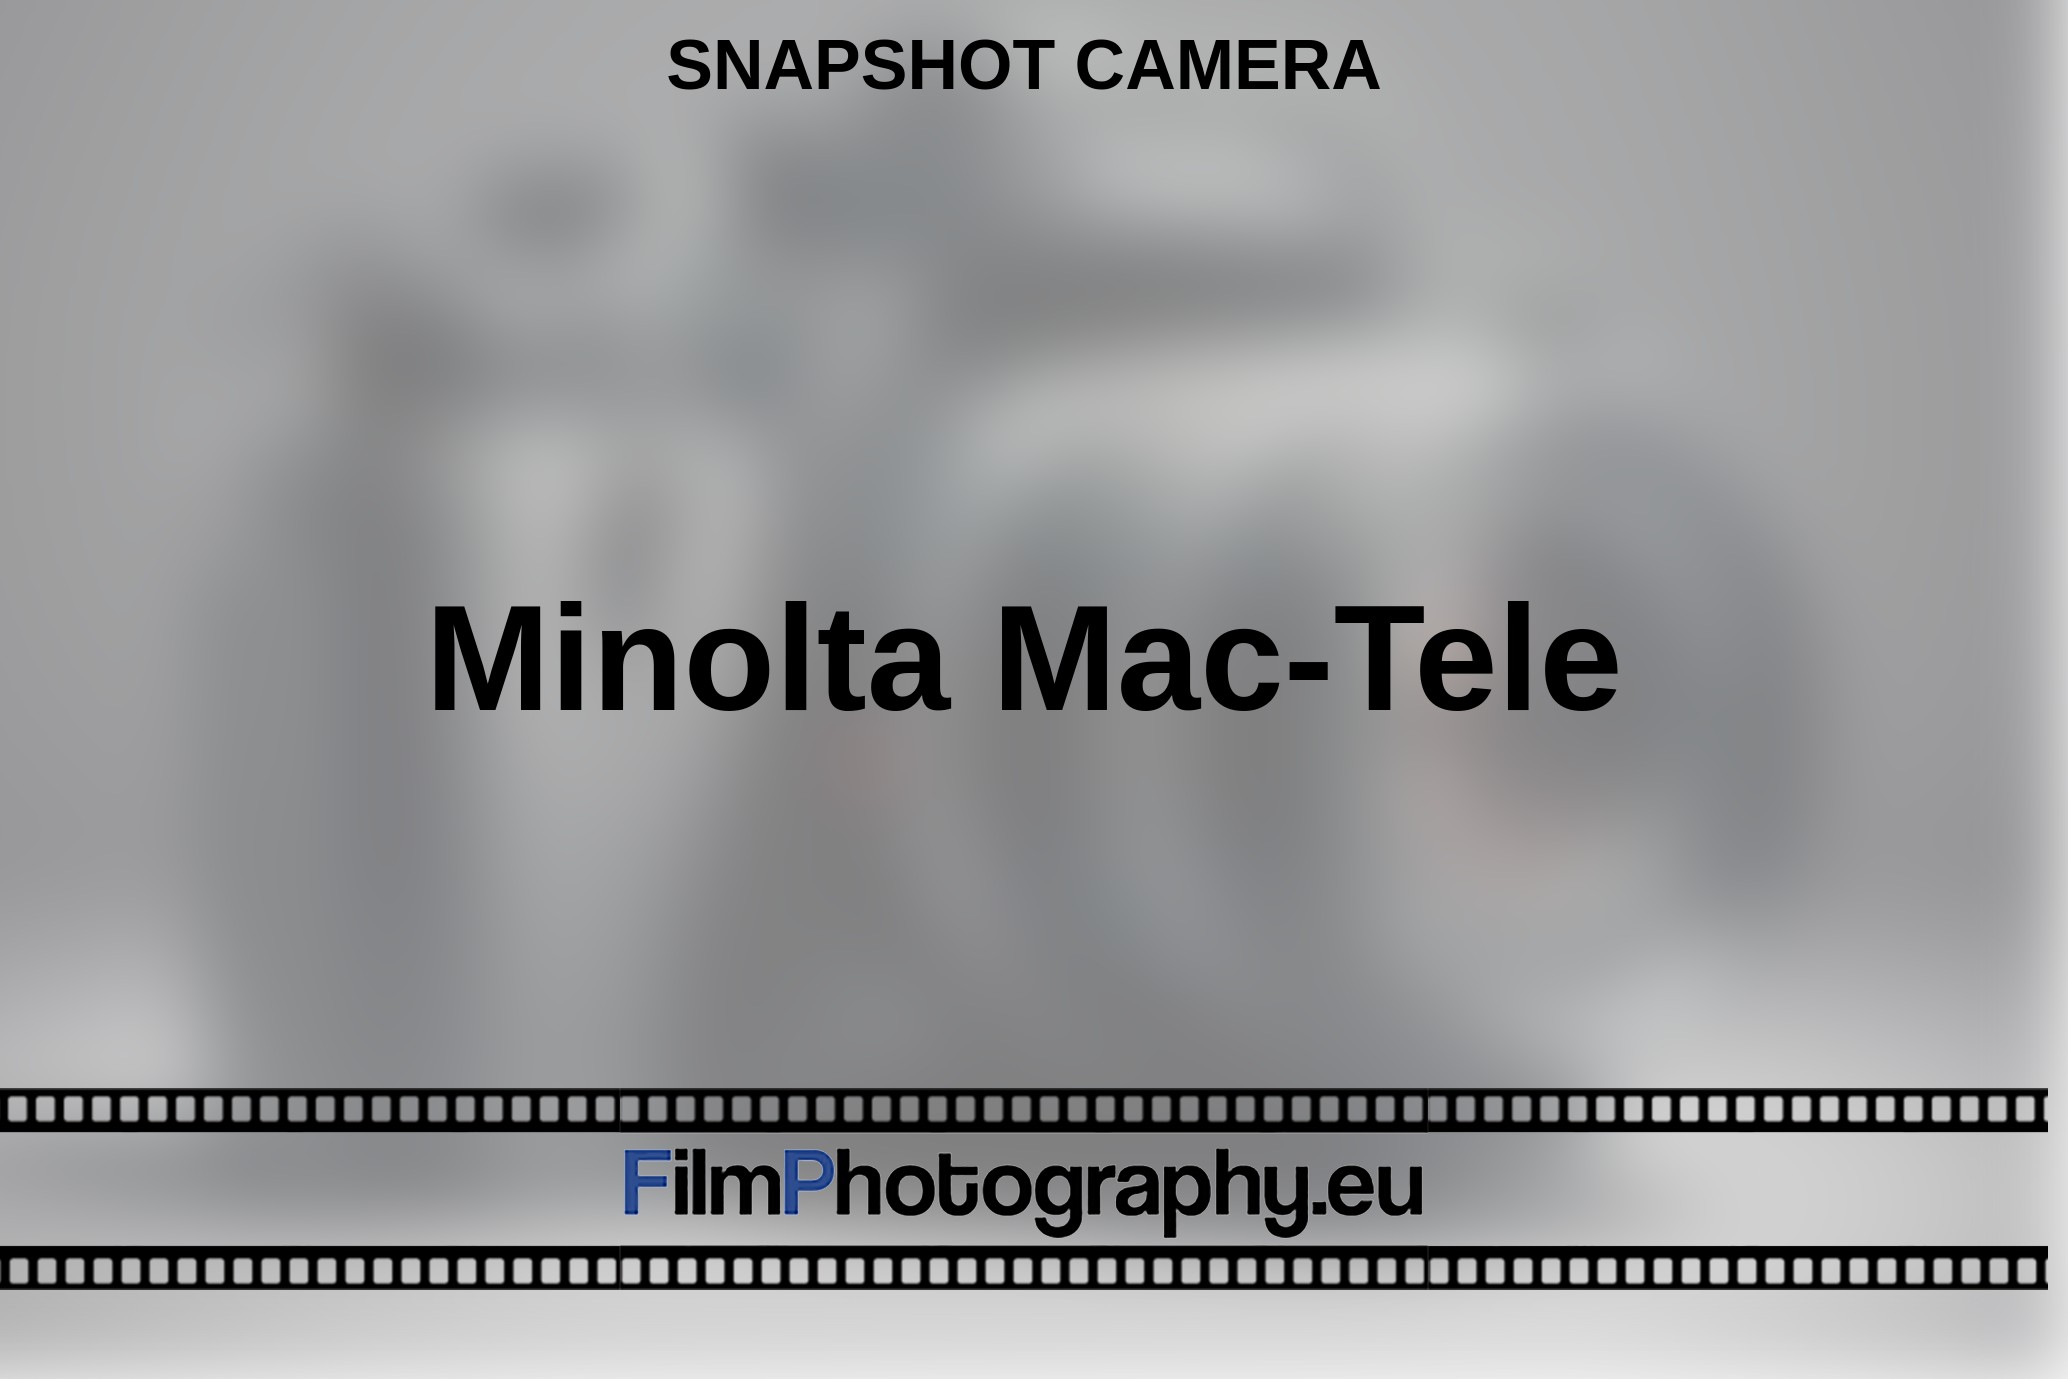 Minolta-Mac-Tele-snapshot-camera-bnv.jpg